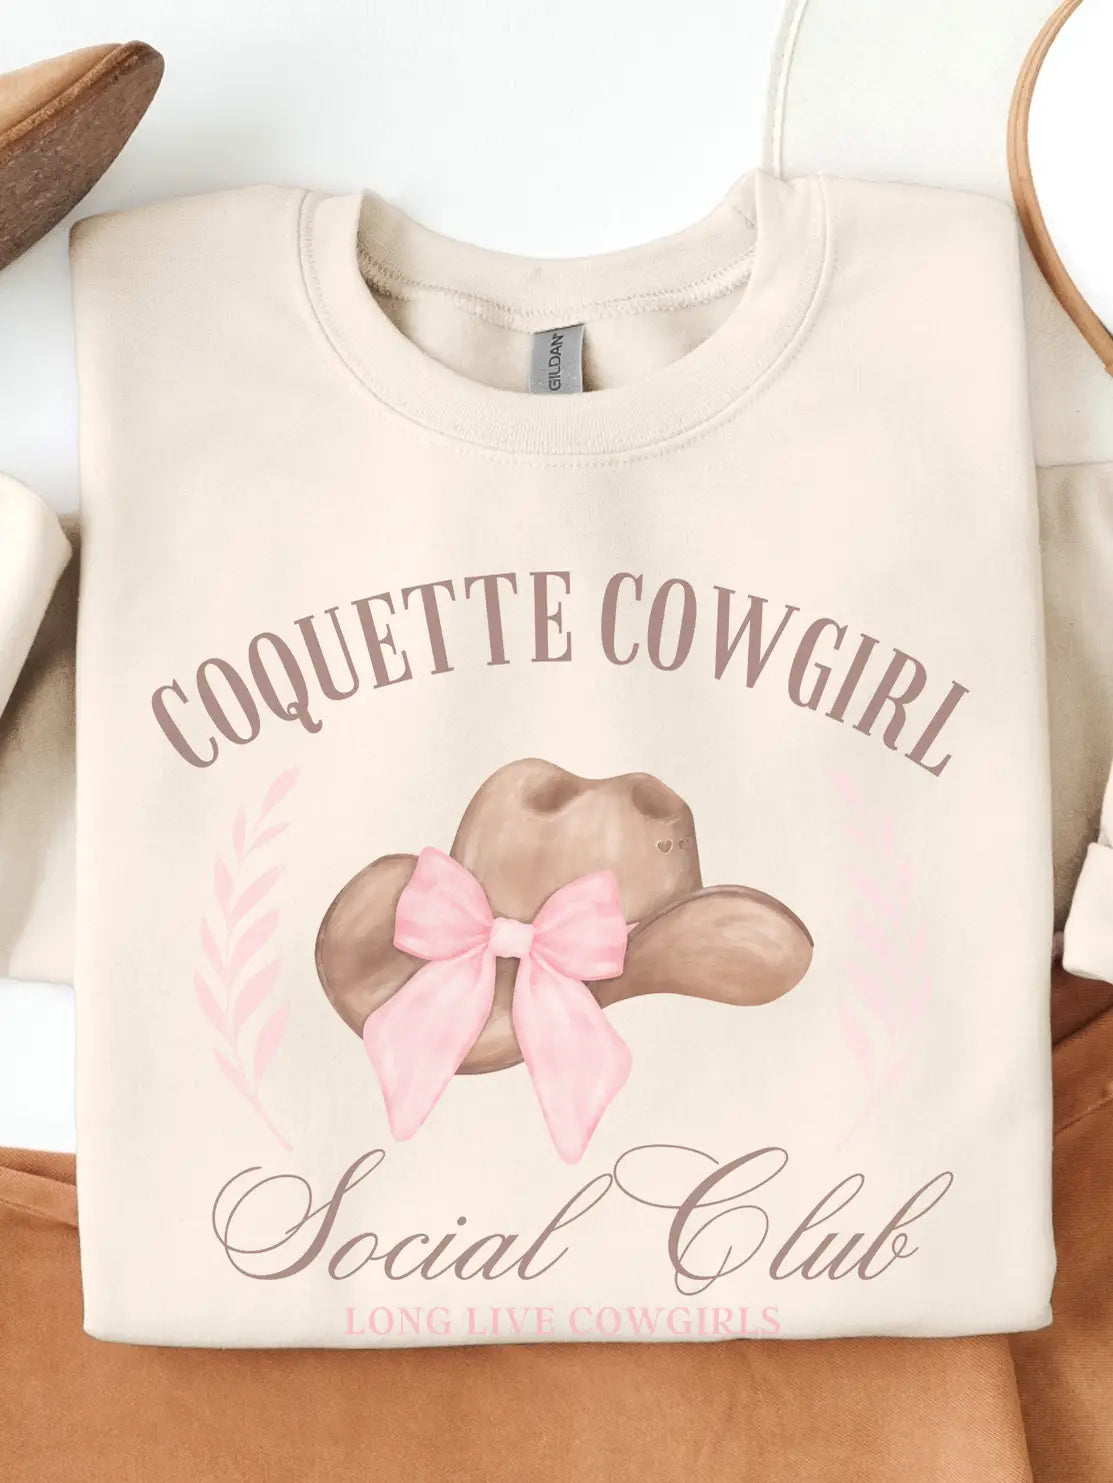 Coquette Cowgirl Sweatshirt